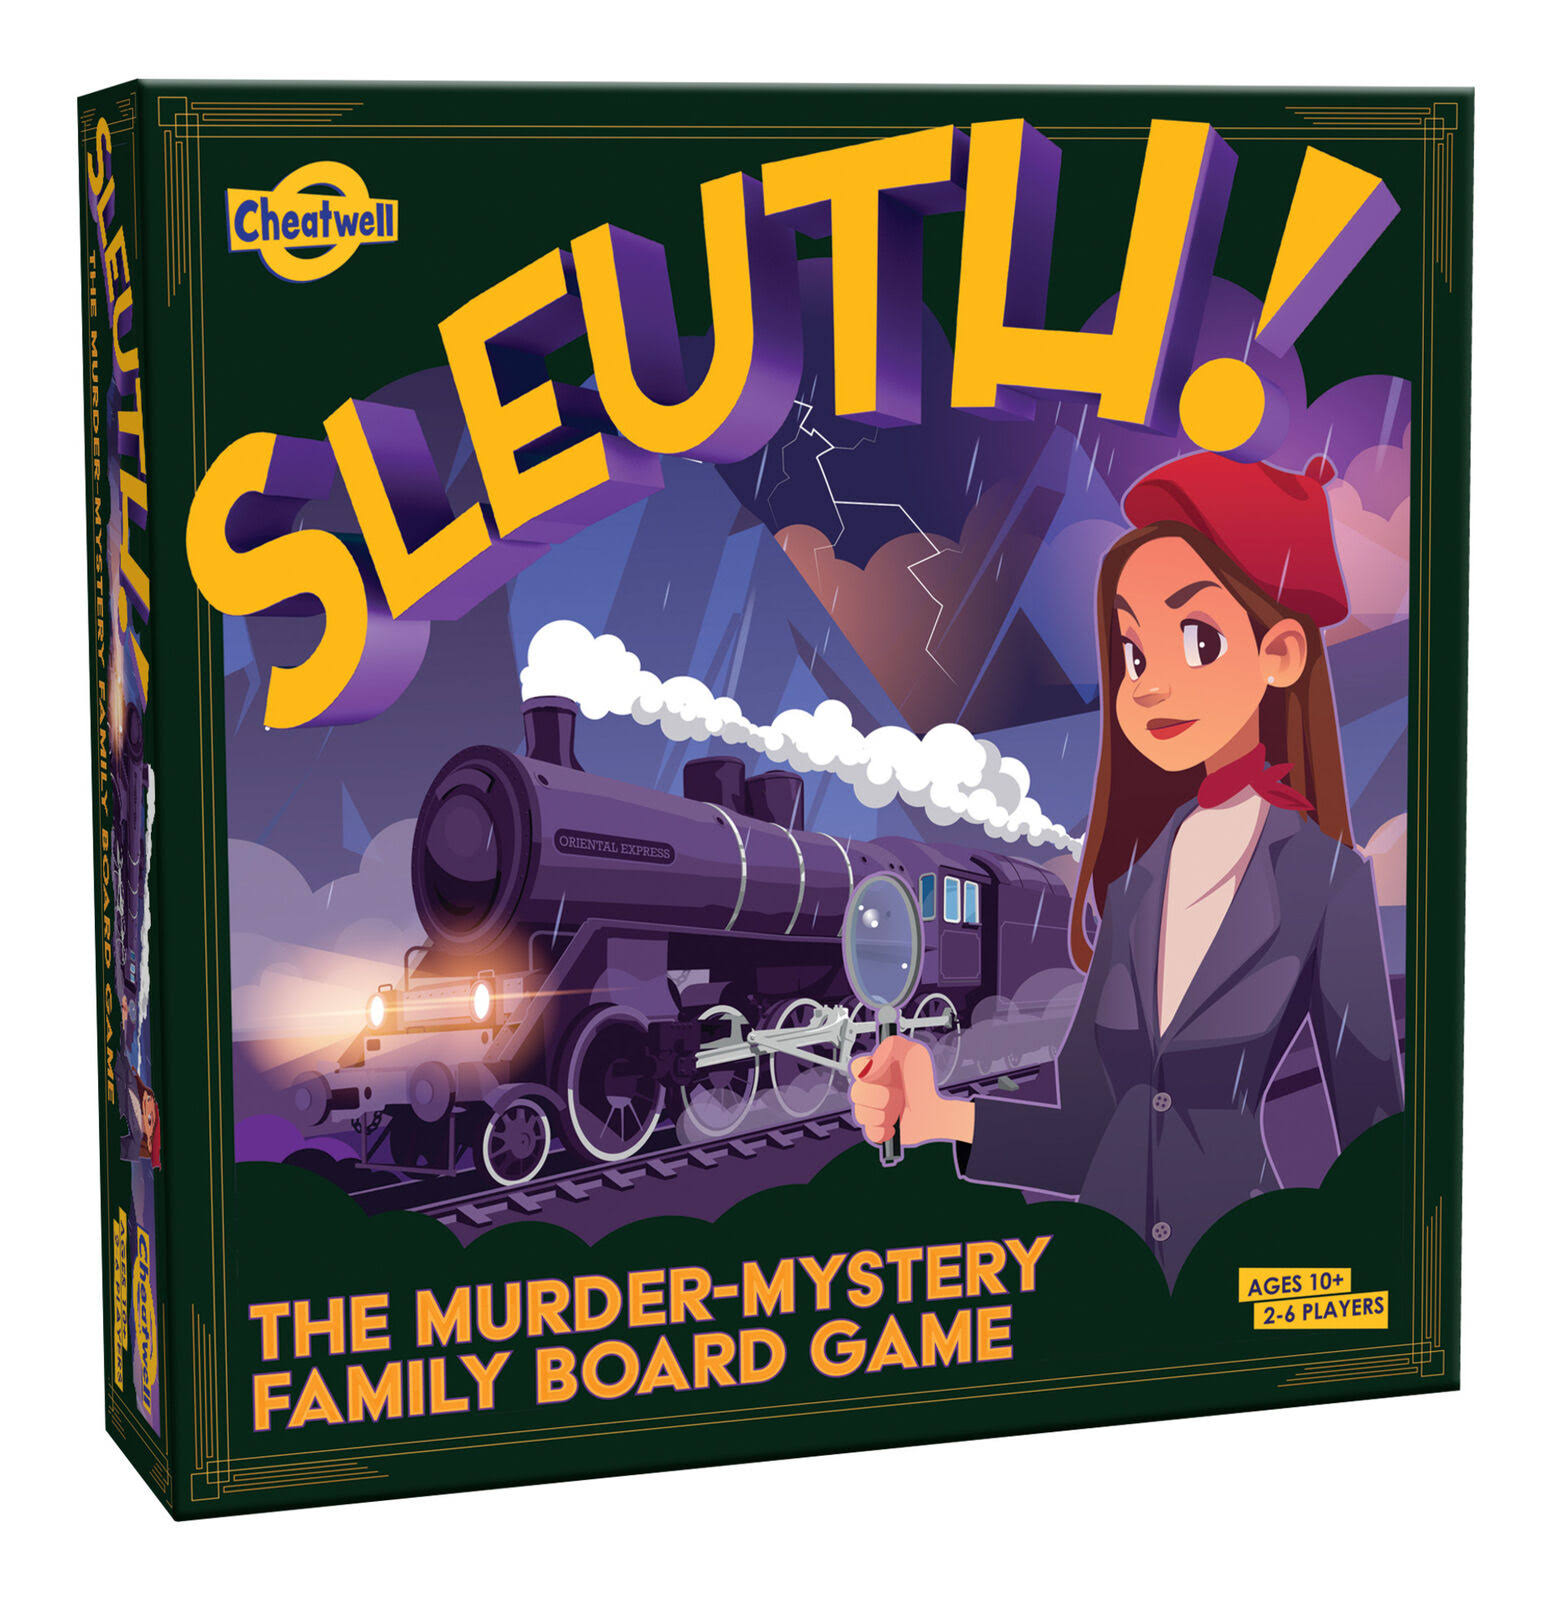 Sleuth! Murder Mystery Board G